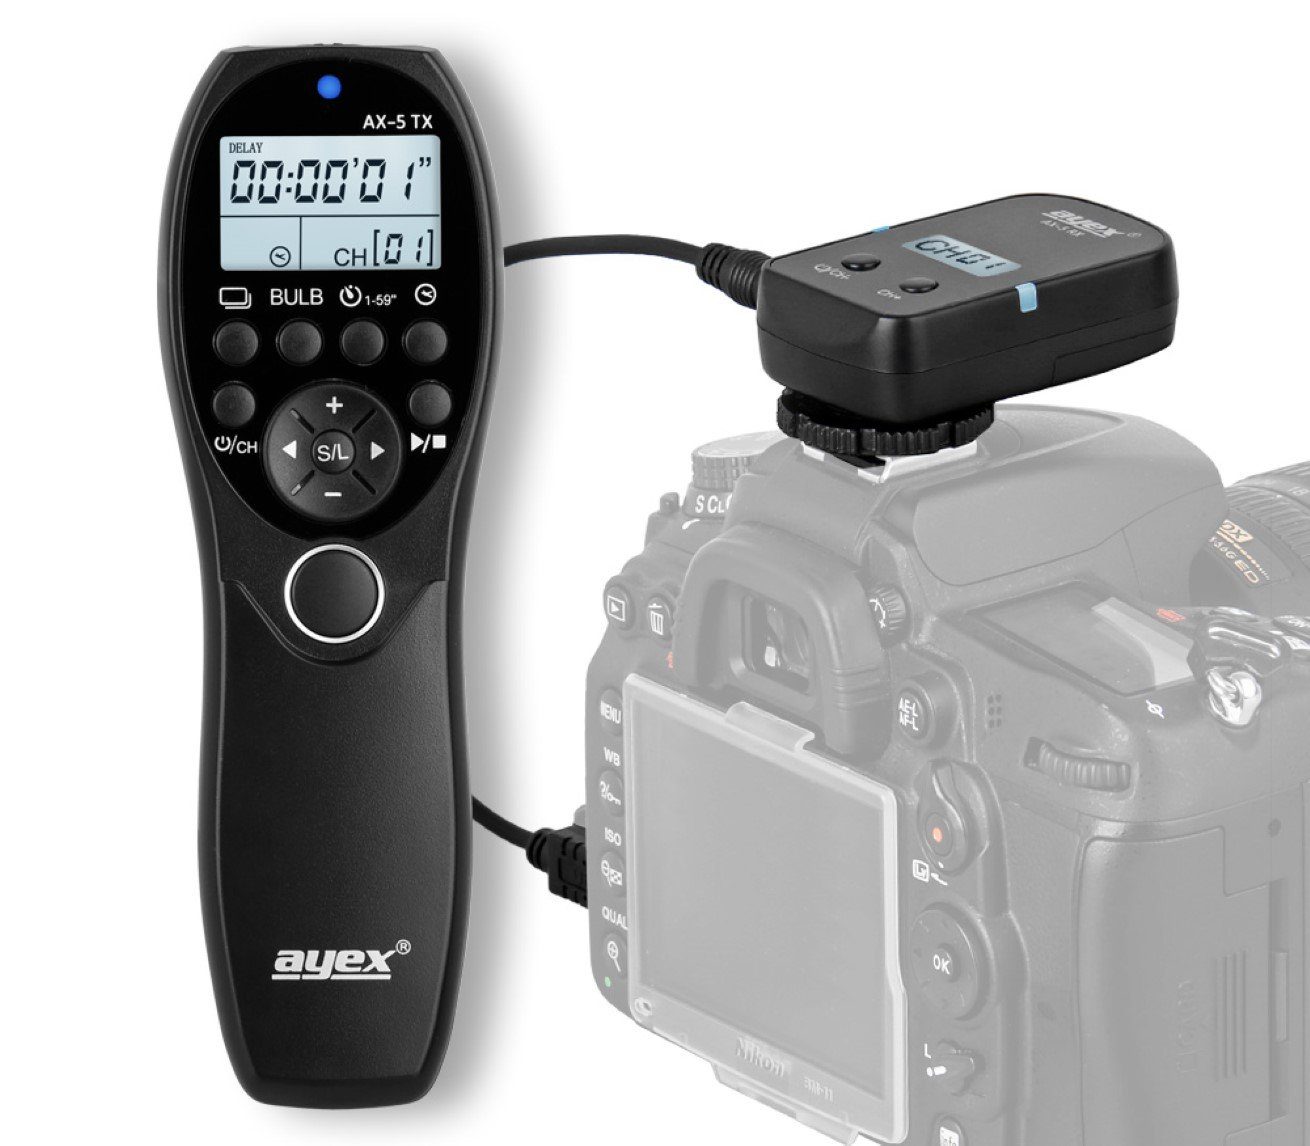 Fernauslöser RR90 Funkfernsteuerung ayex Fujifilm AX-5 Timer